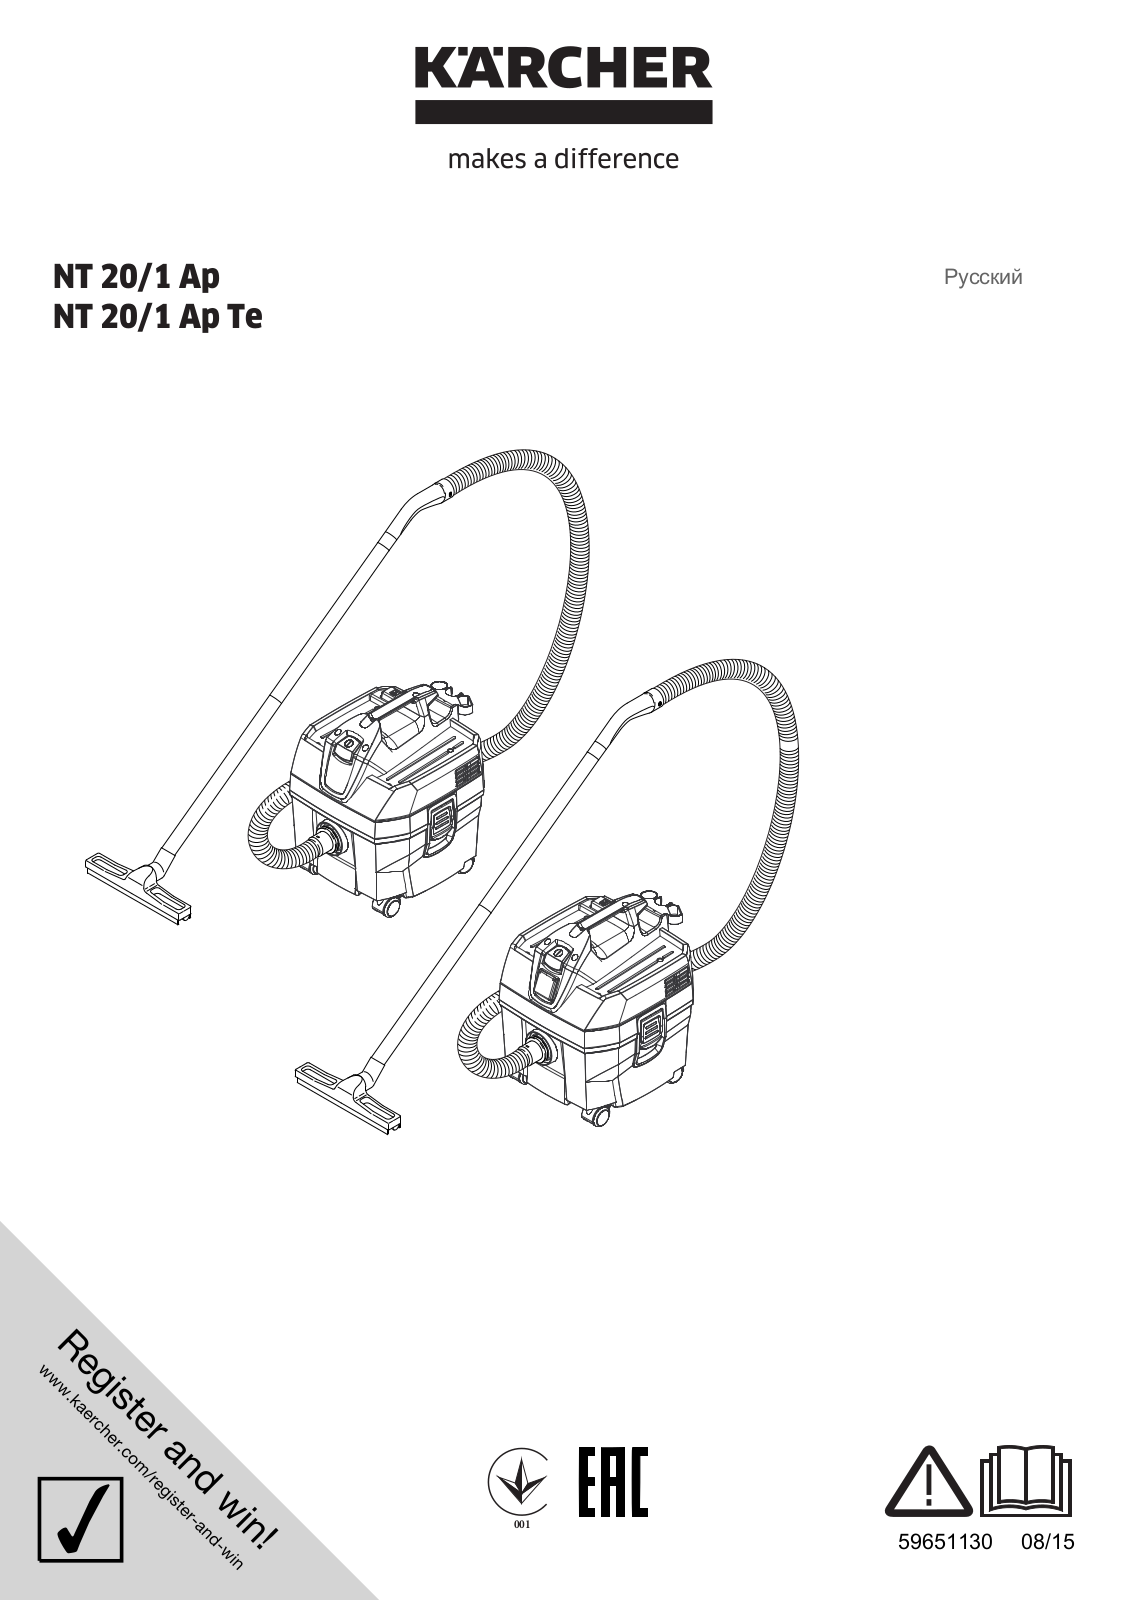 Karcher NT 20/1 Ap, NT 20/1 Ap Te Manual